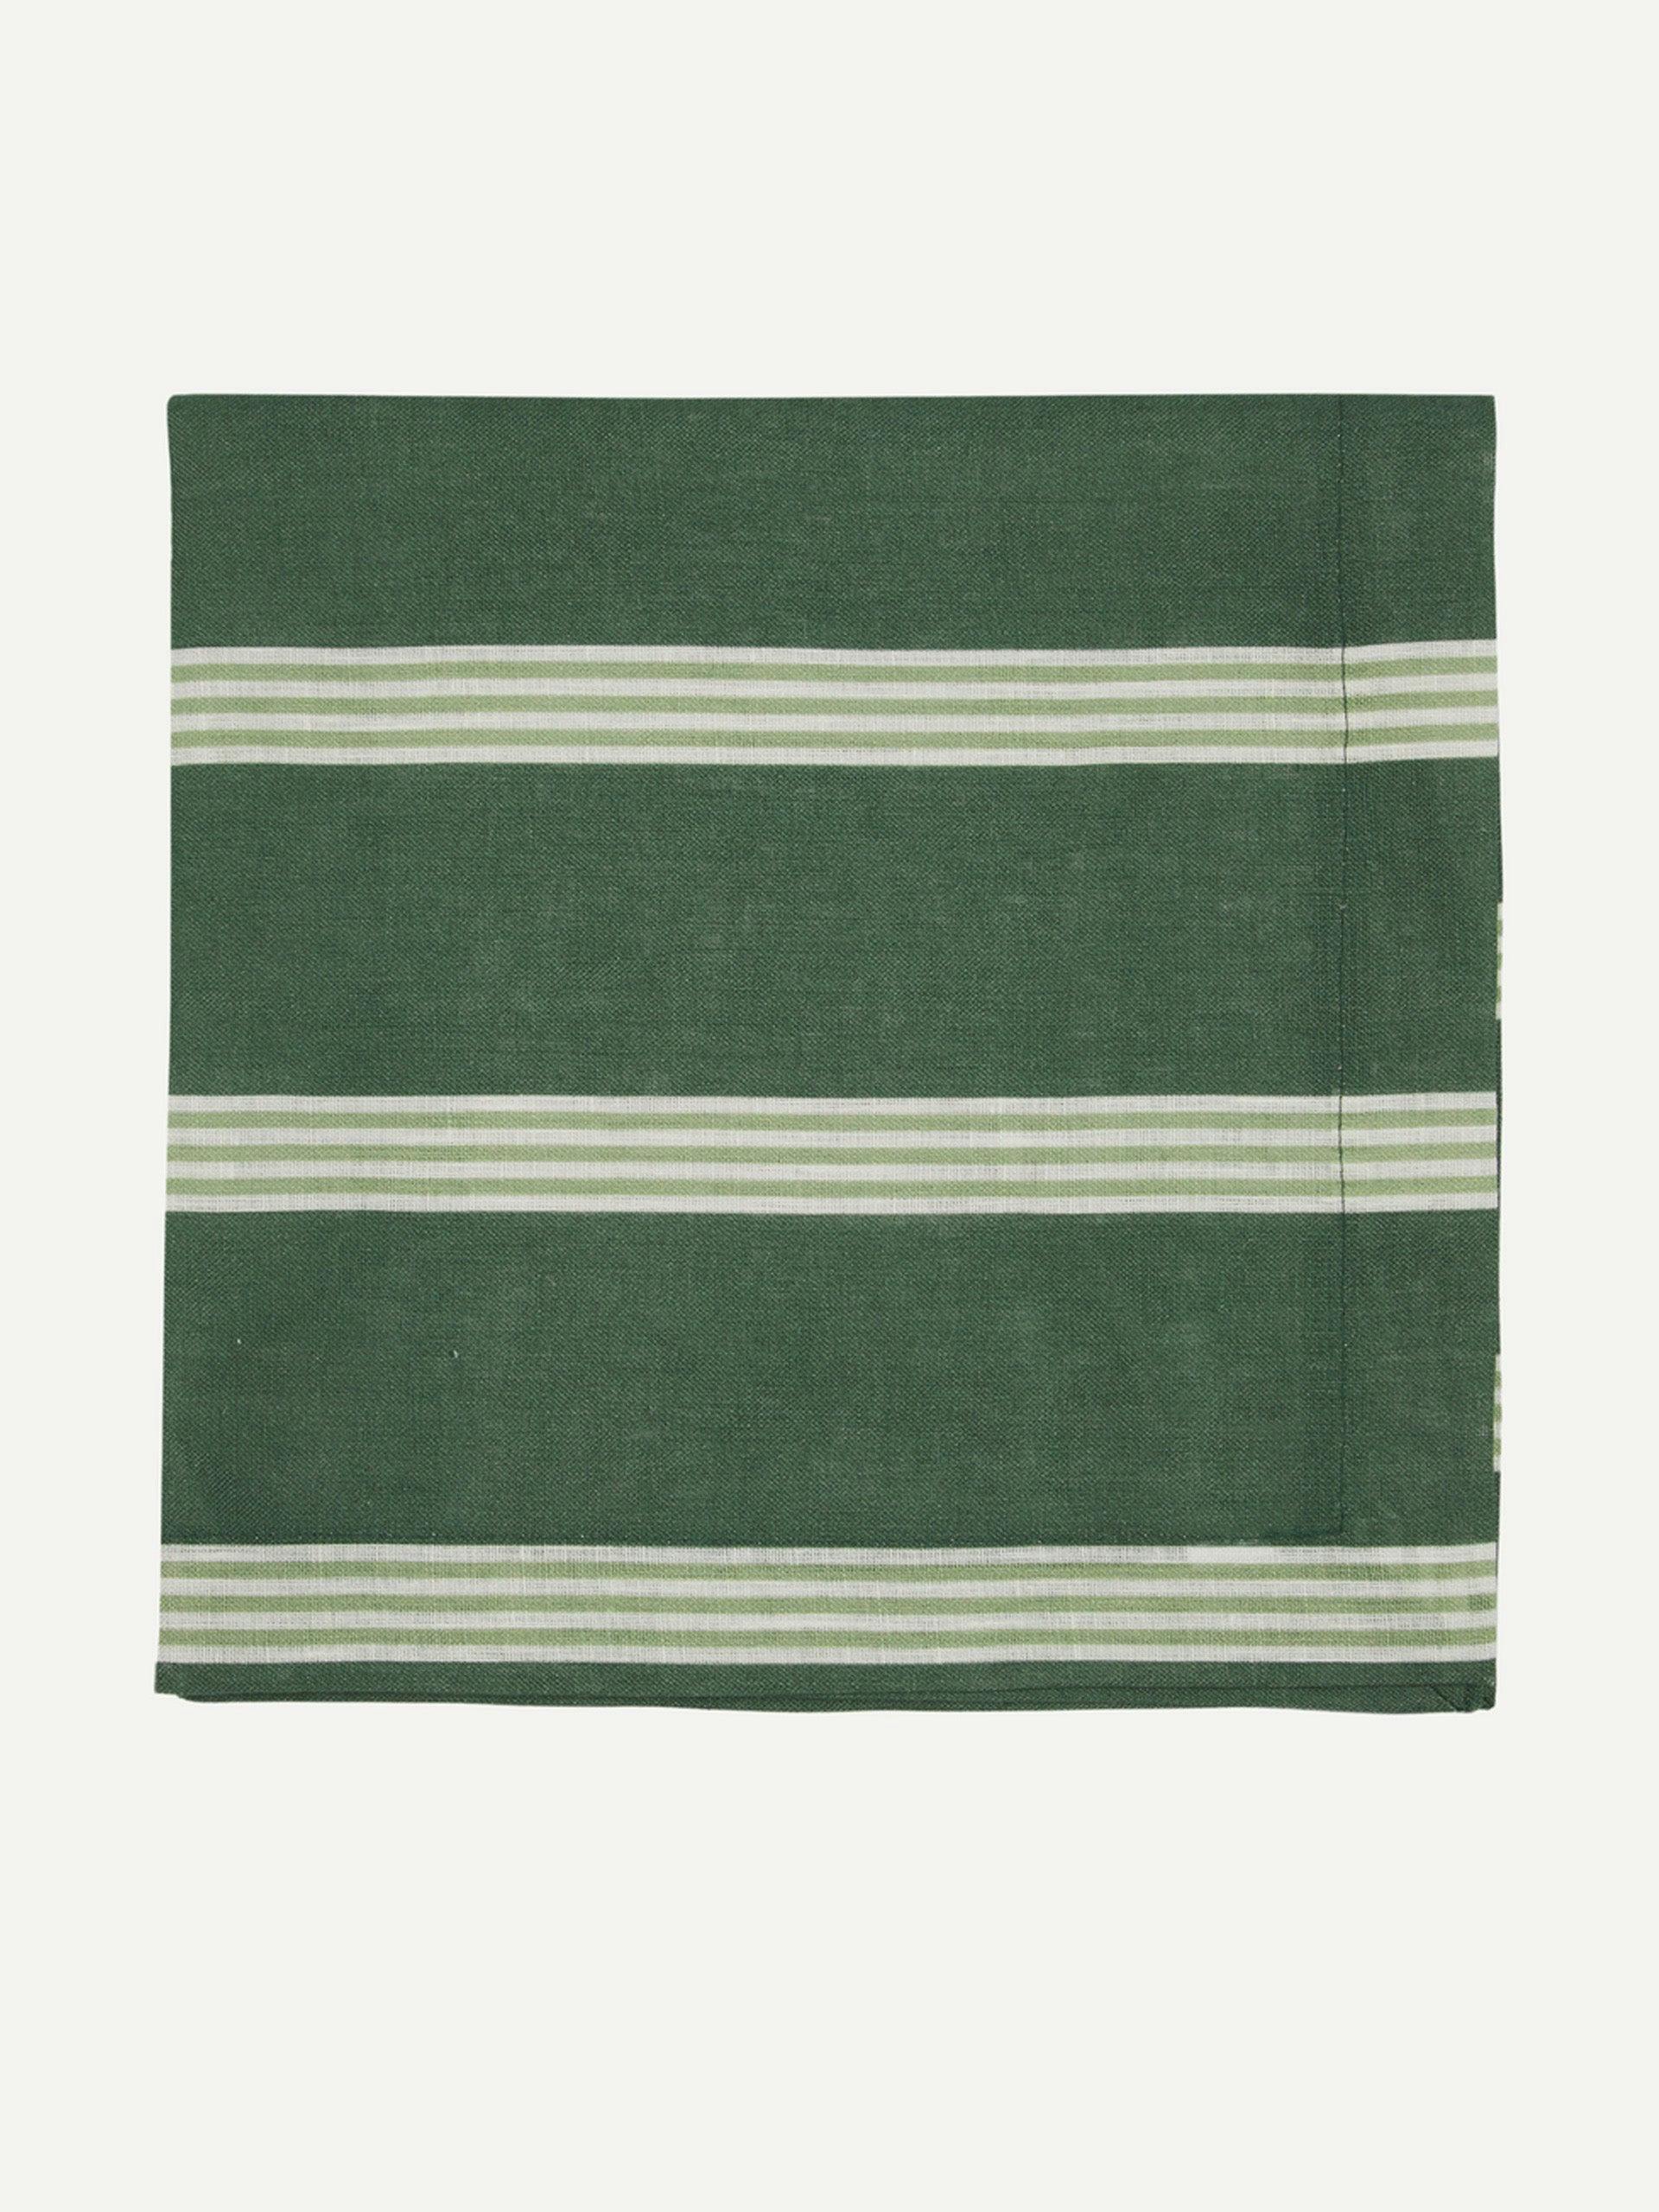 Green striped linen napkin